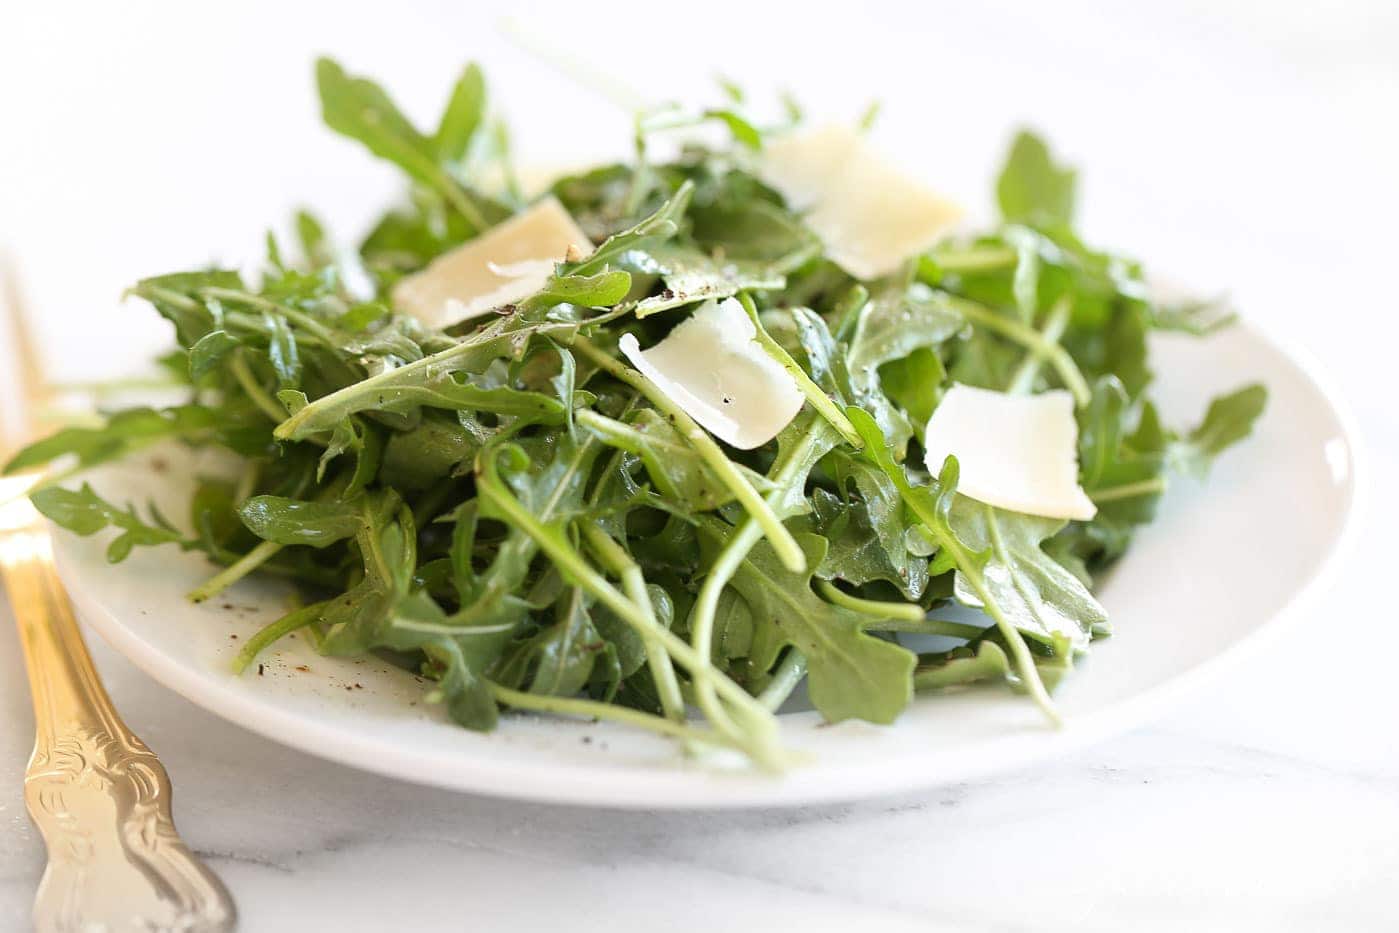 arugula salad recipe with parmesan shavings on white plate